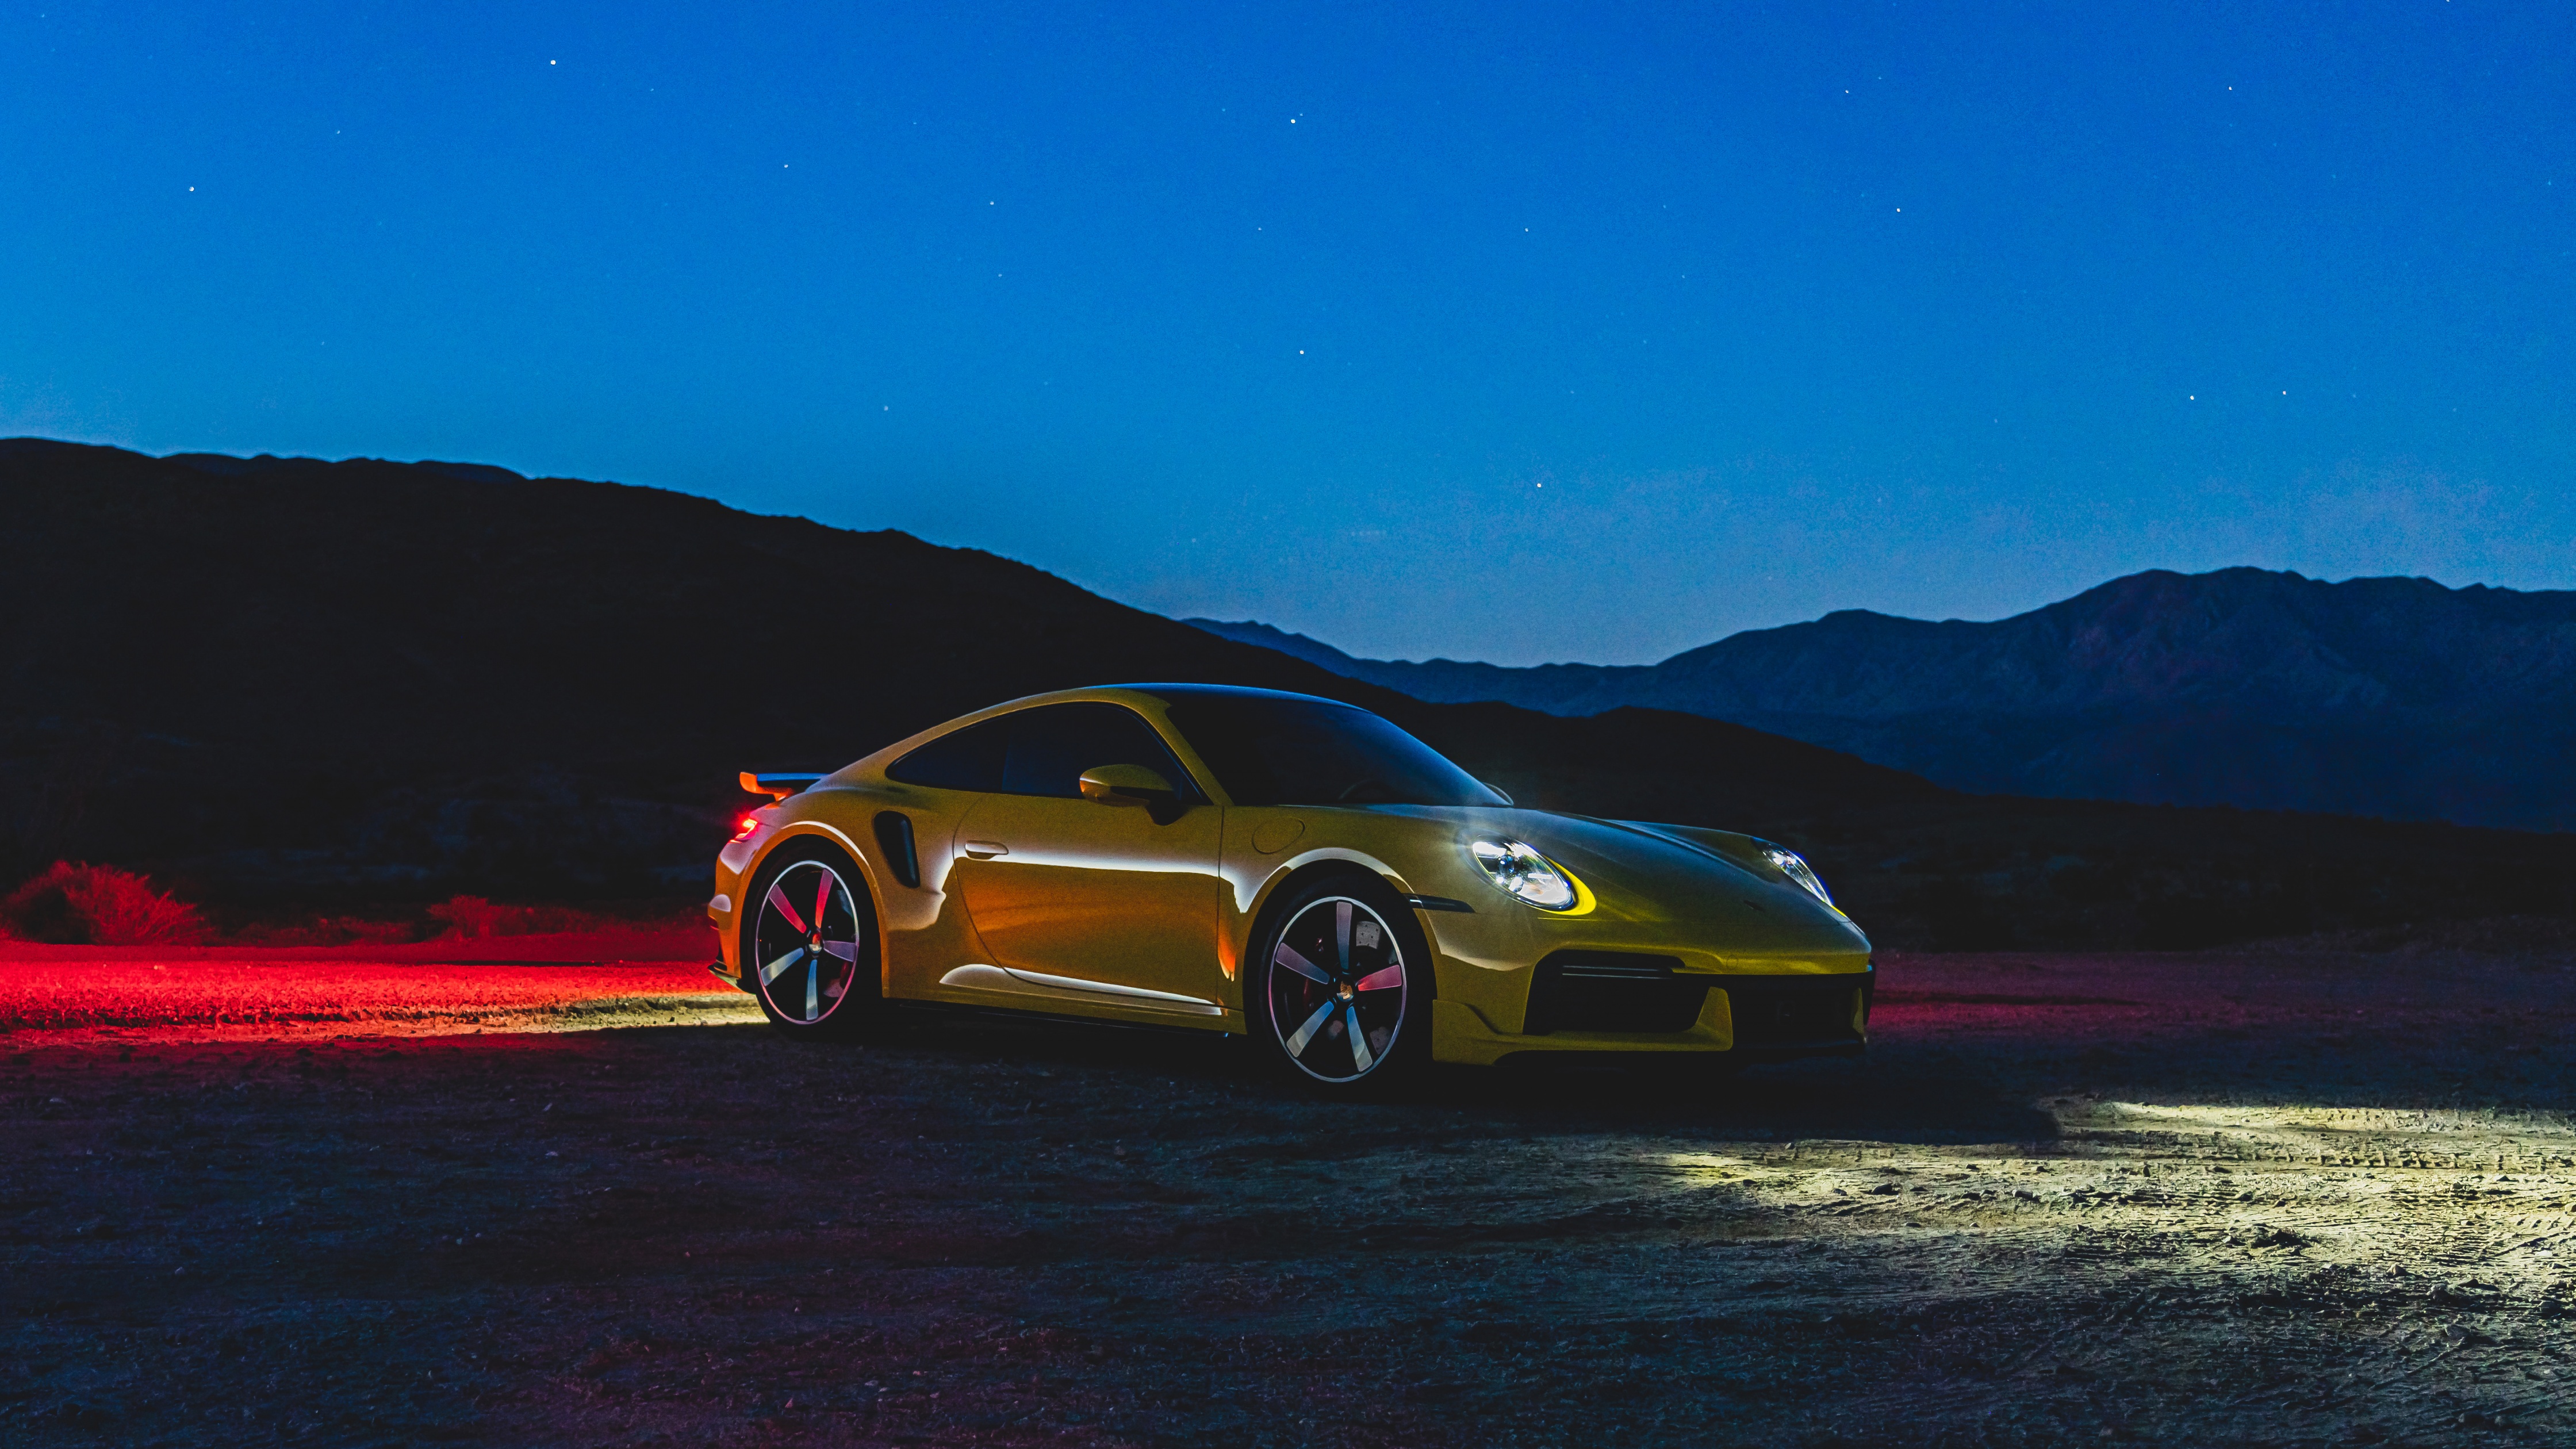 Porsche 911 Turbo Wallpaper 4K, Night, 5K, 8K, 2021, Cars, #4575